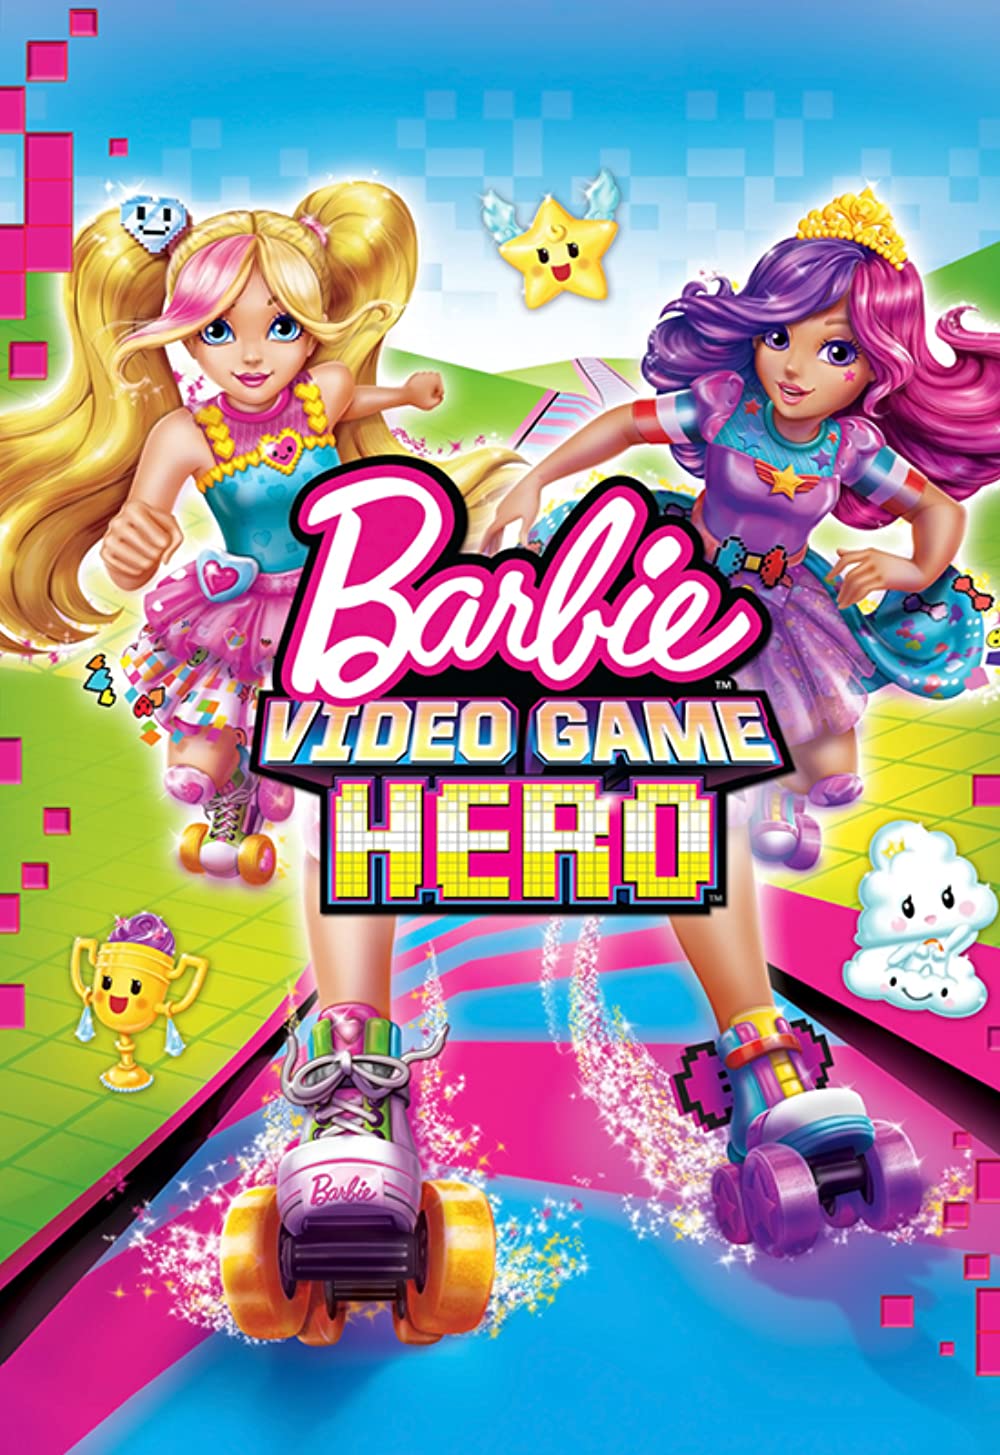 Filmbeschreibung zu Barbie Video Game Hero